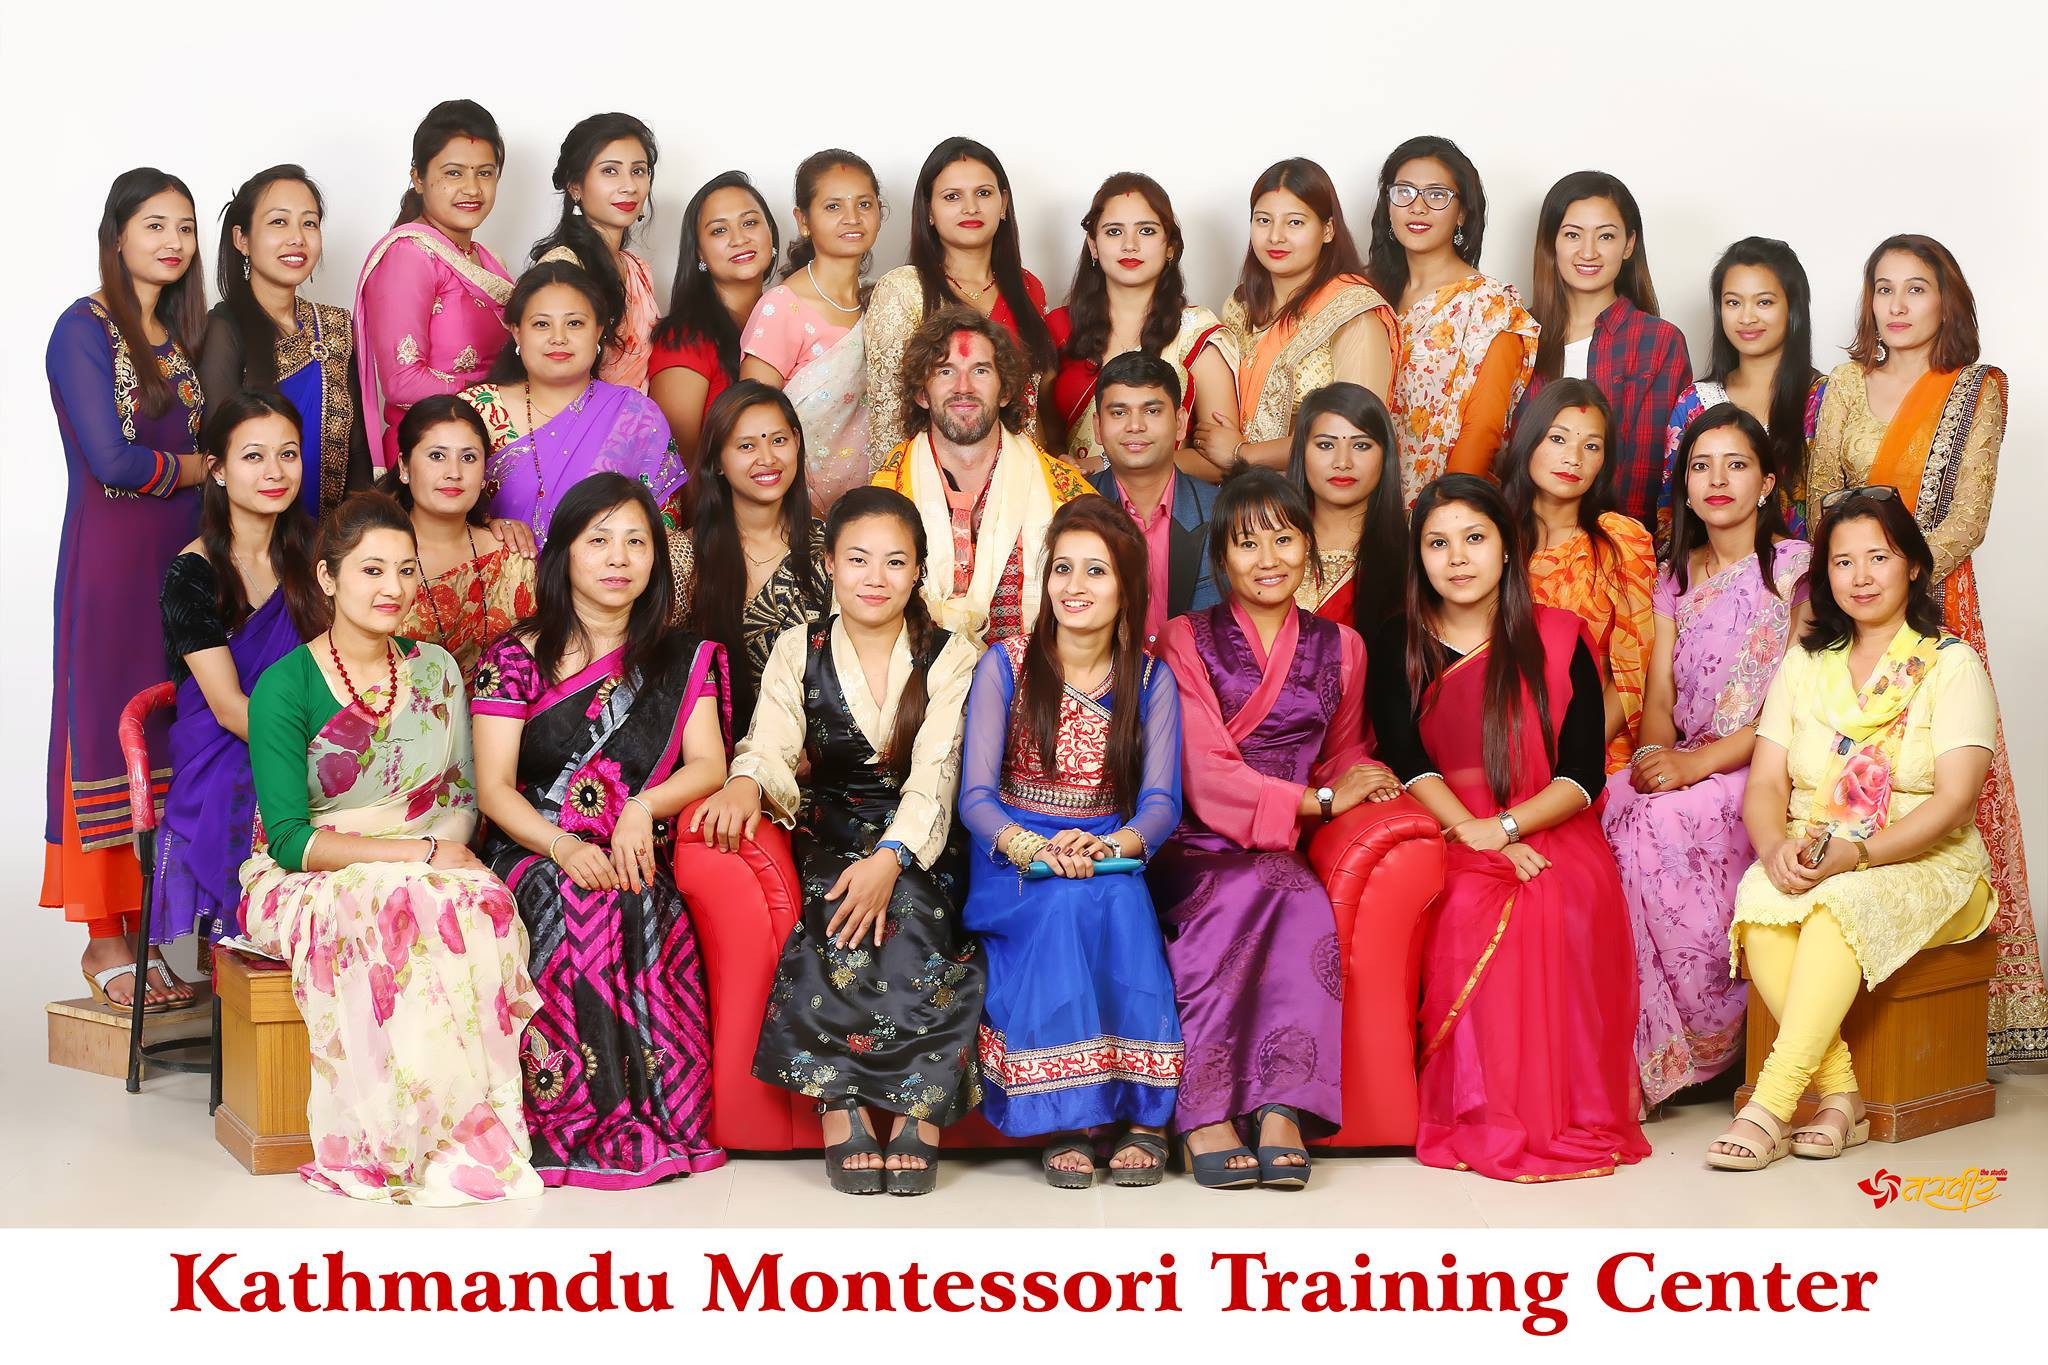 Kathmandu Montessori Training Center is the one of the best Montessori Training Center in Kathmandu Nepal.